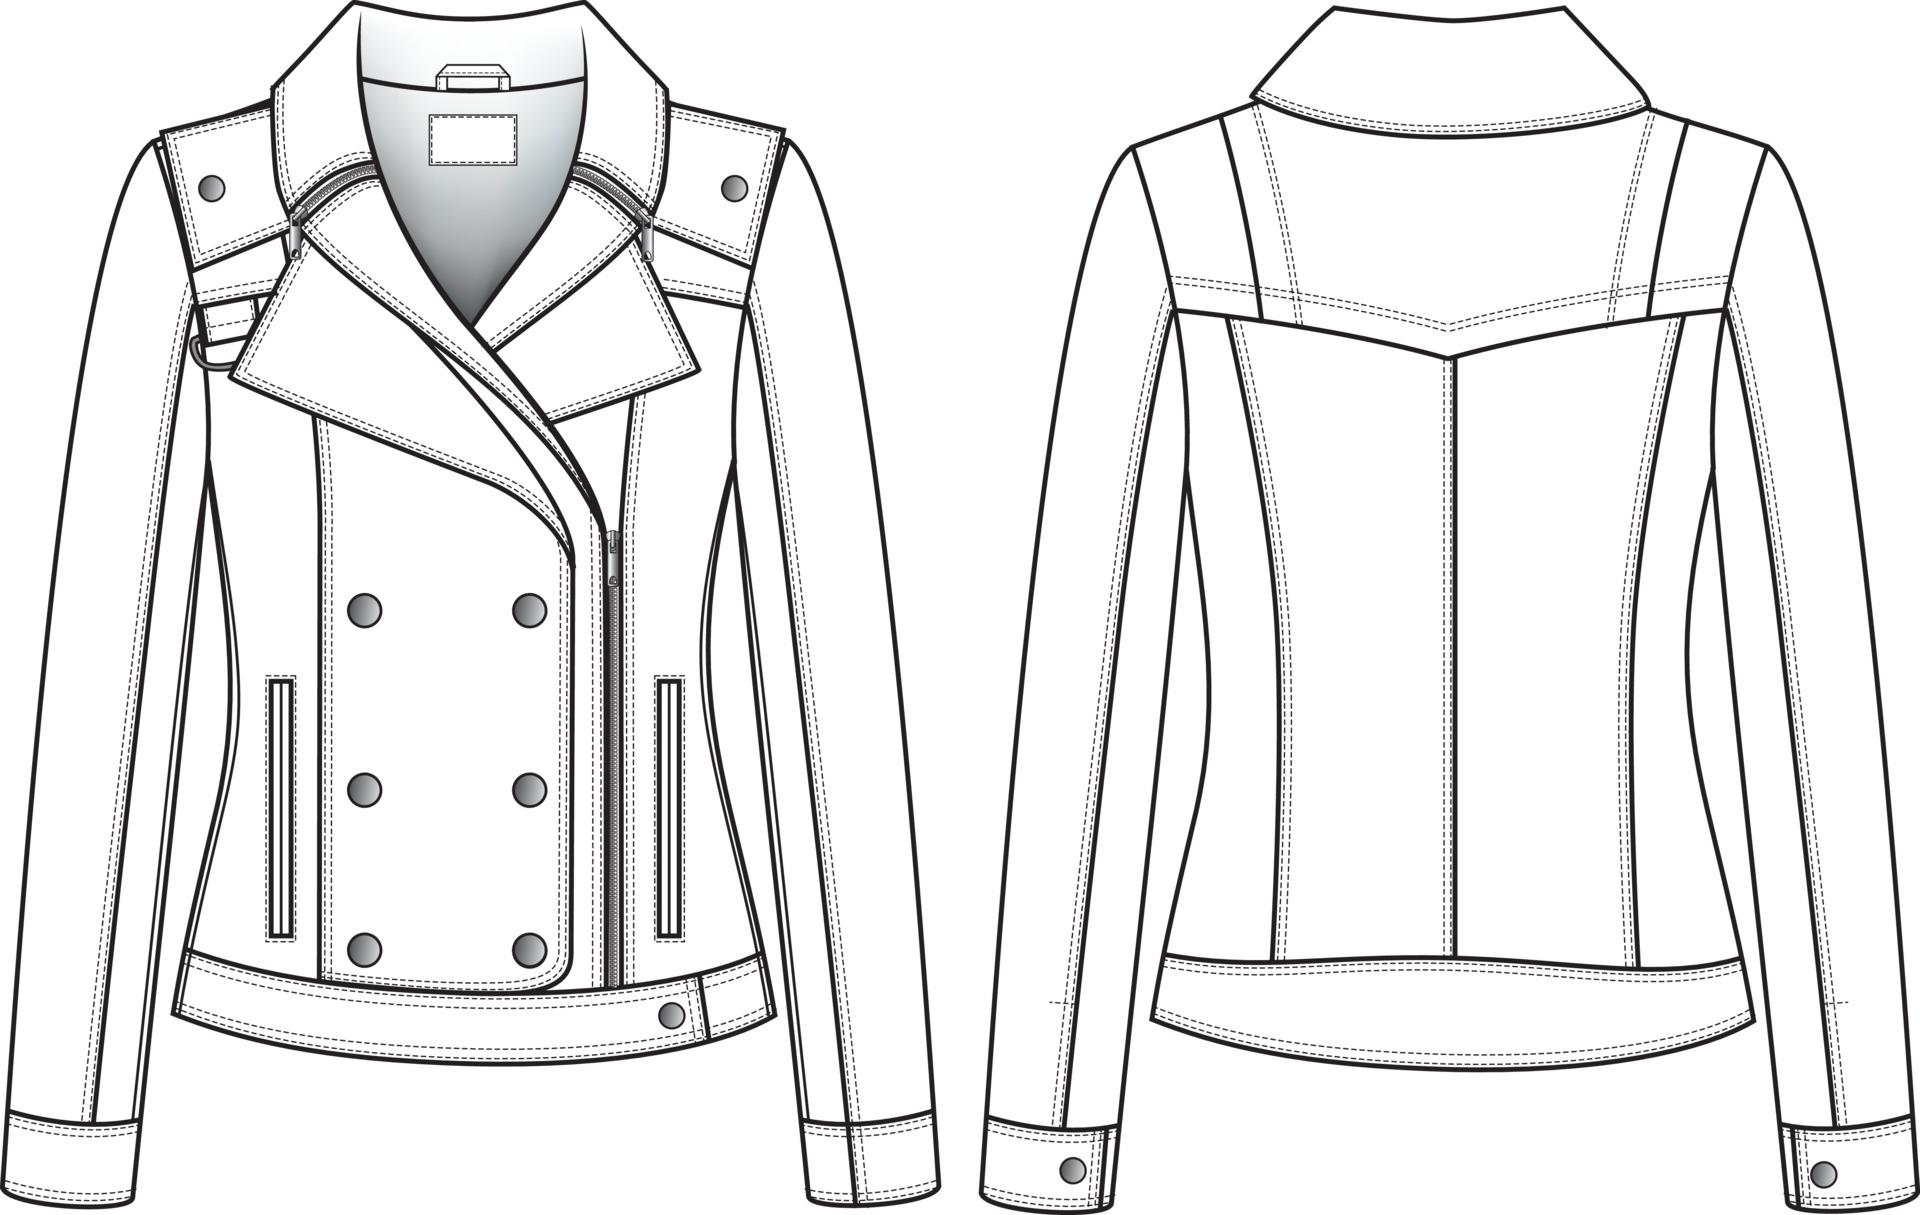 Leather jacket technical illustration. Editable flat fashion sketch